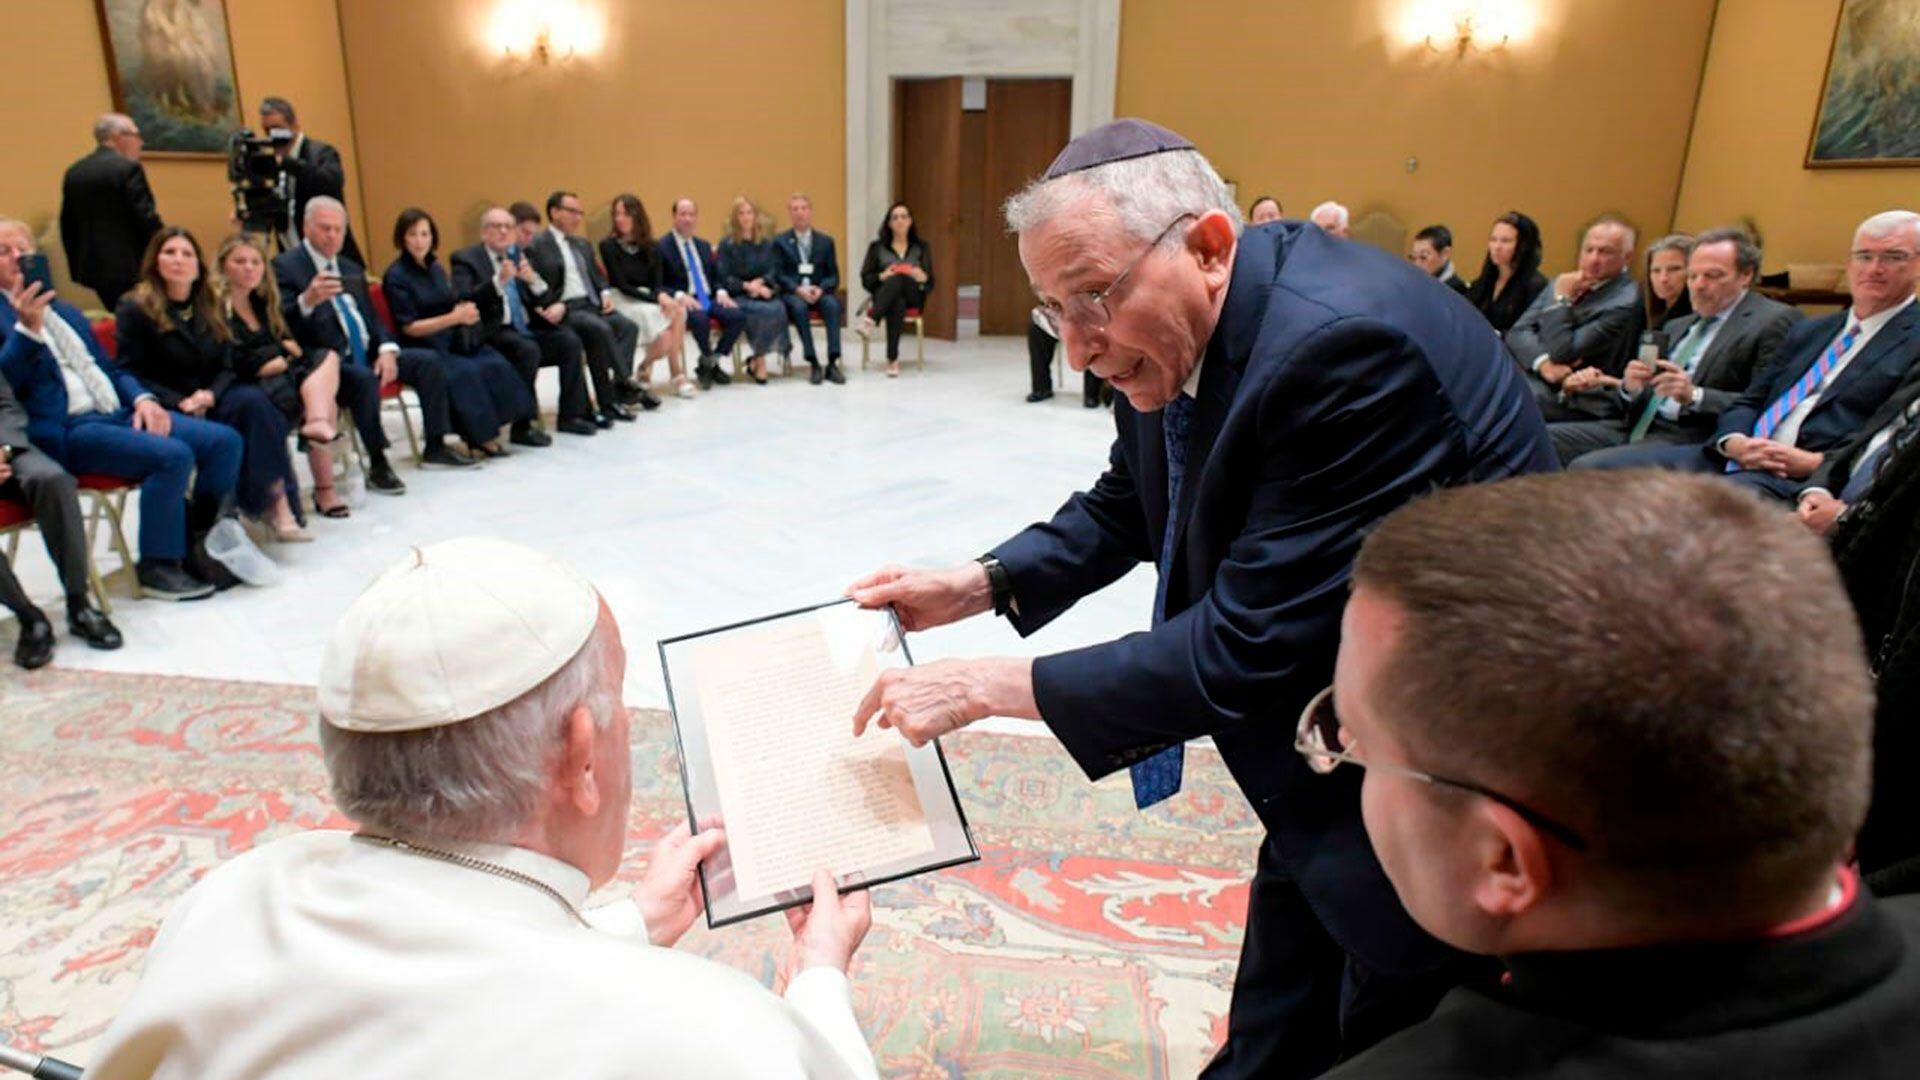 Papa con el Centro Simon Wiesenthal